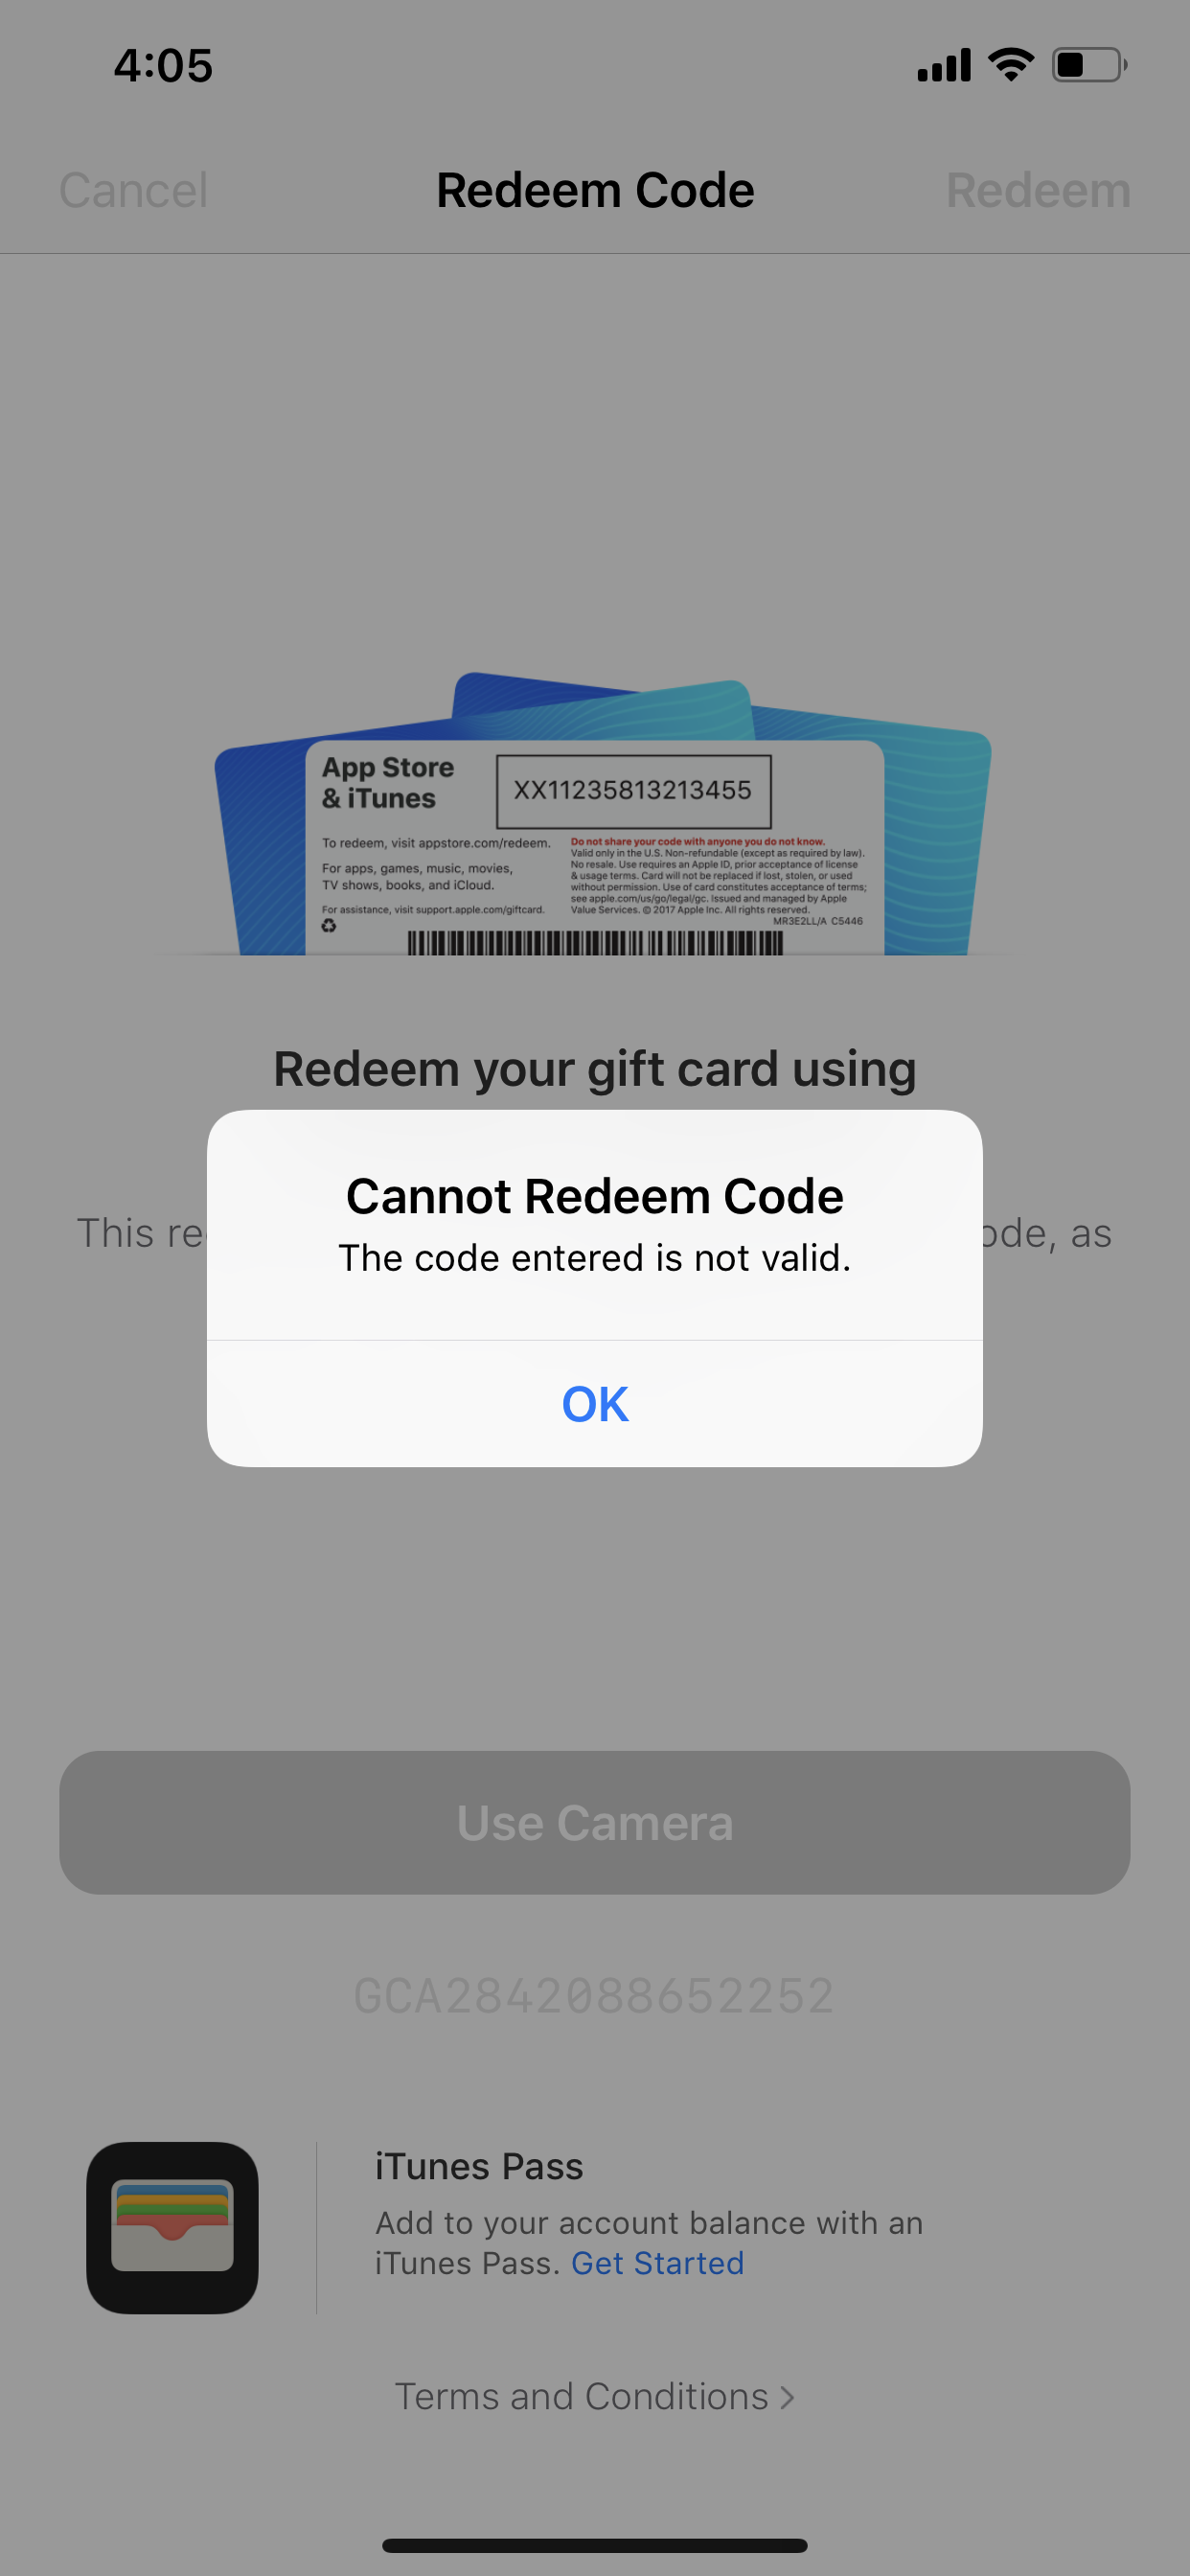 I cannot redeem code - Apple Community